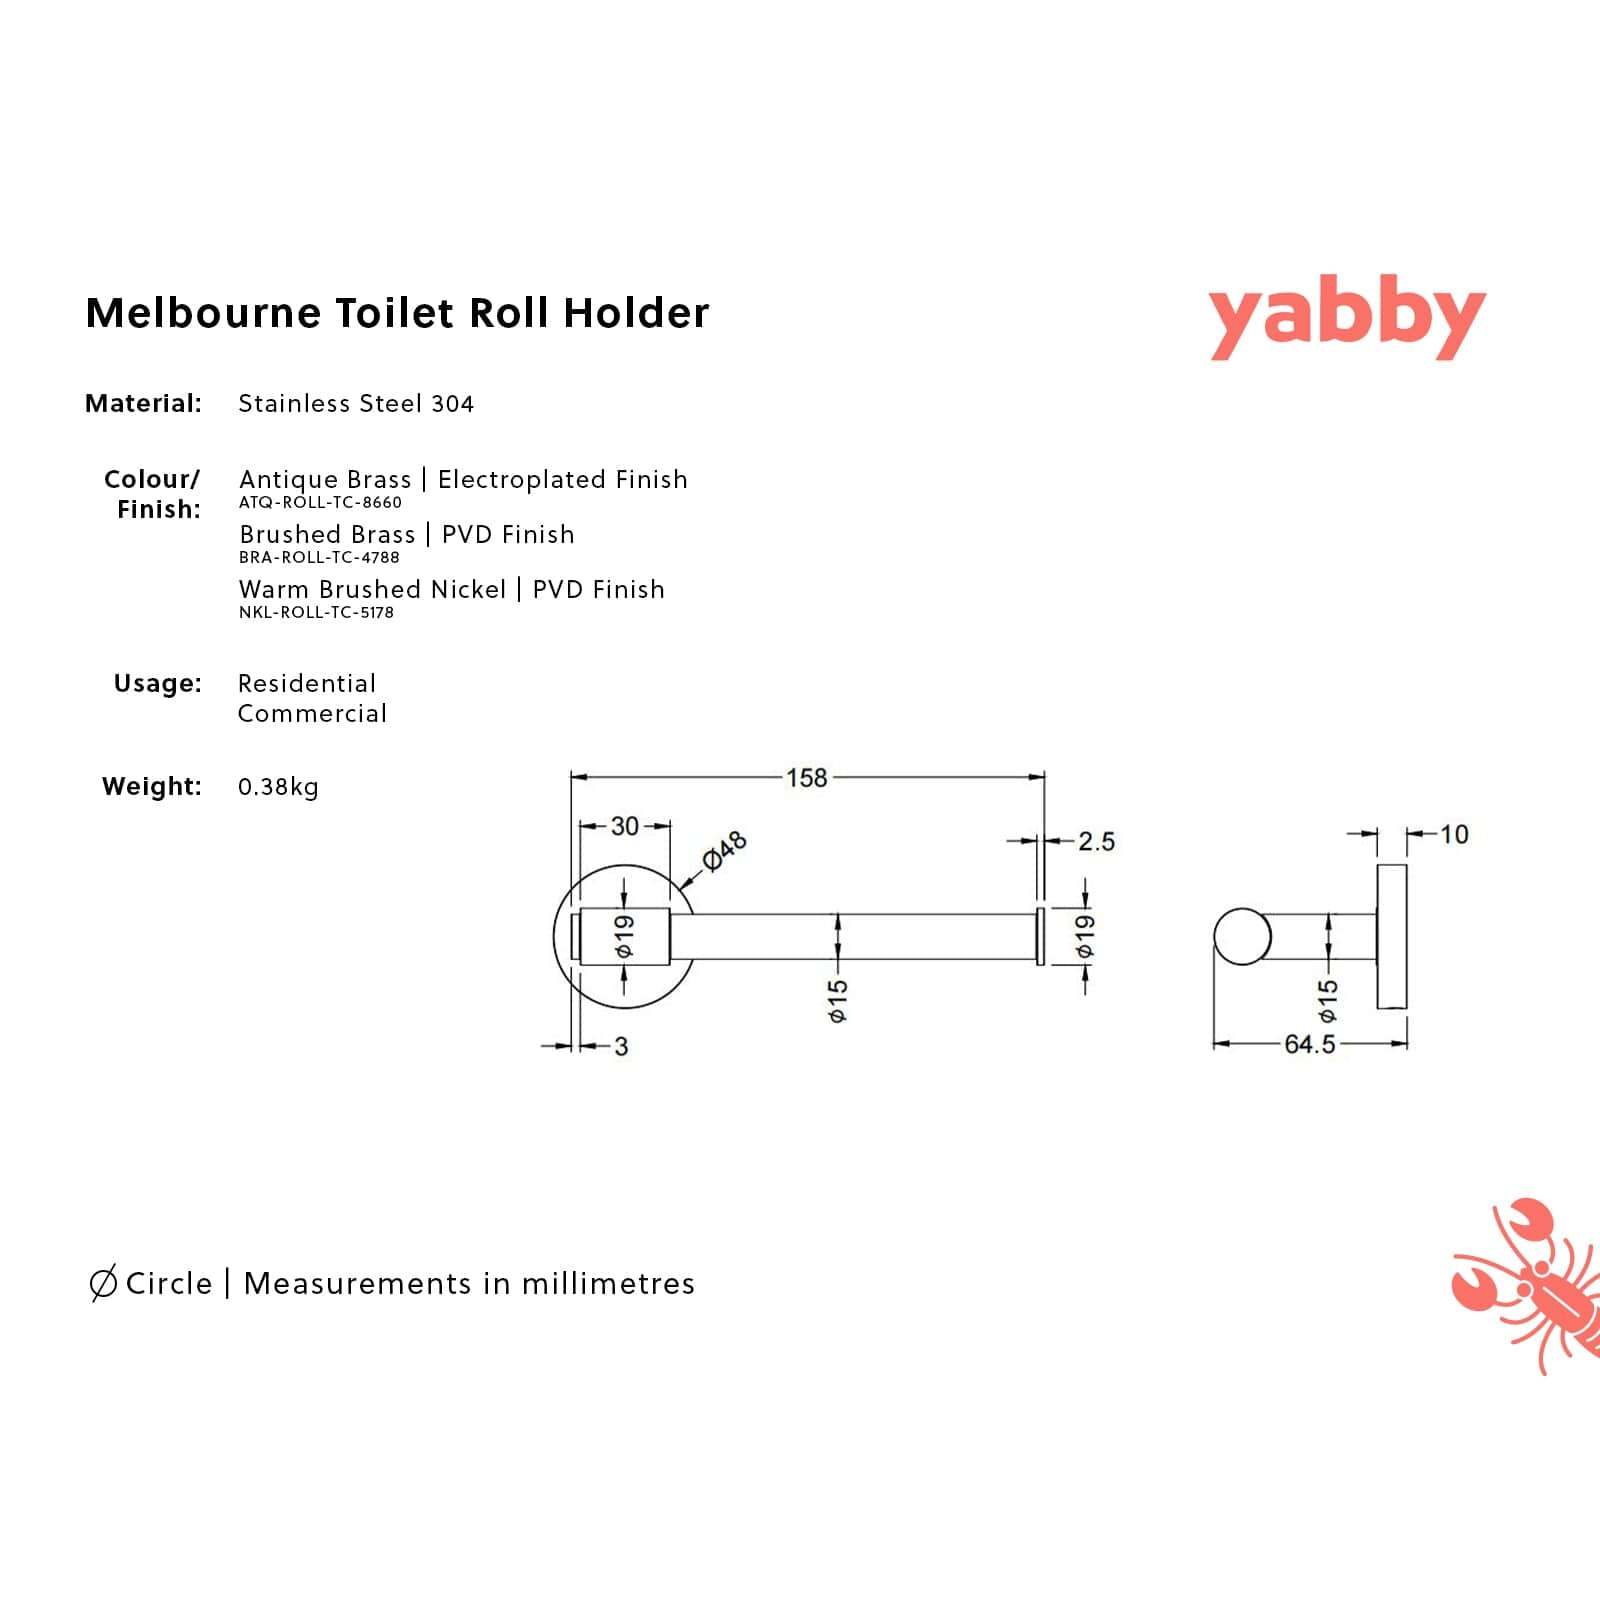 TileCloud TAPWARE Melbourne Toilet Roll Holder Brushed Brass